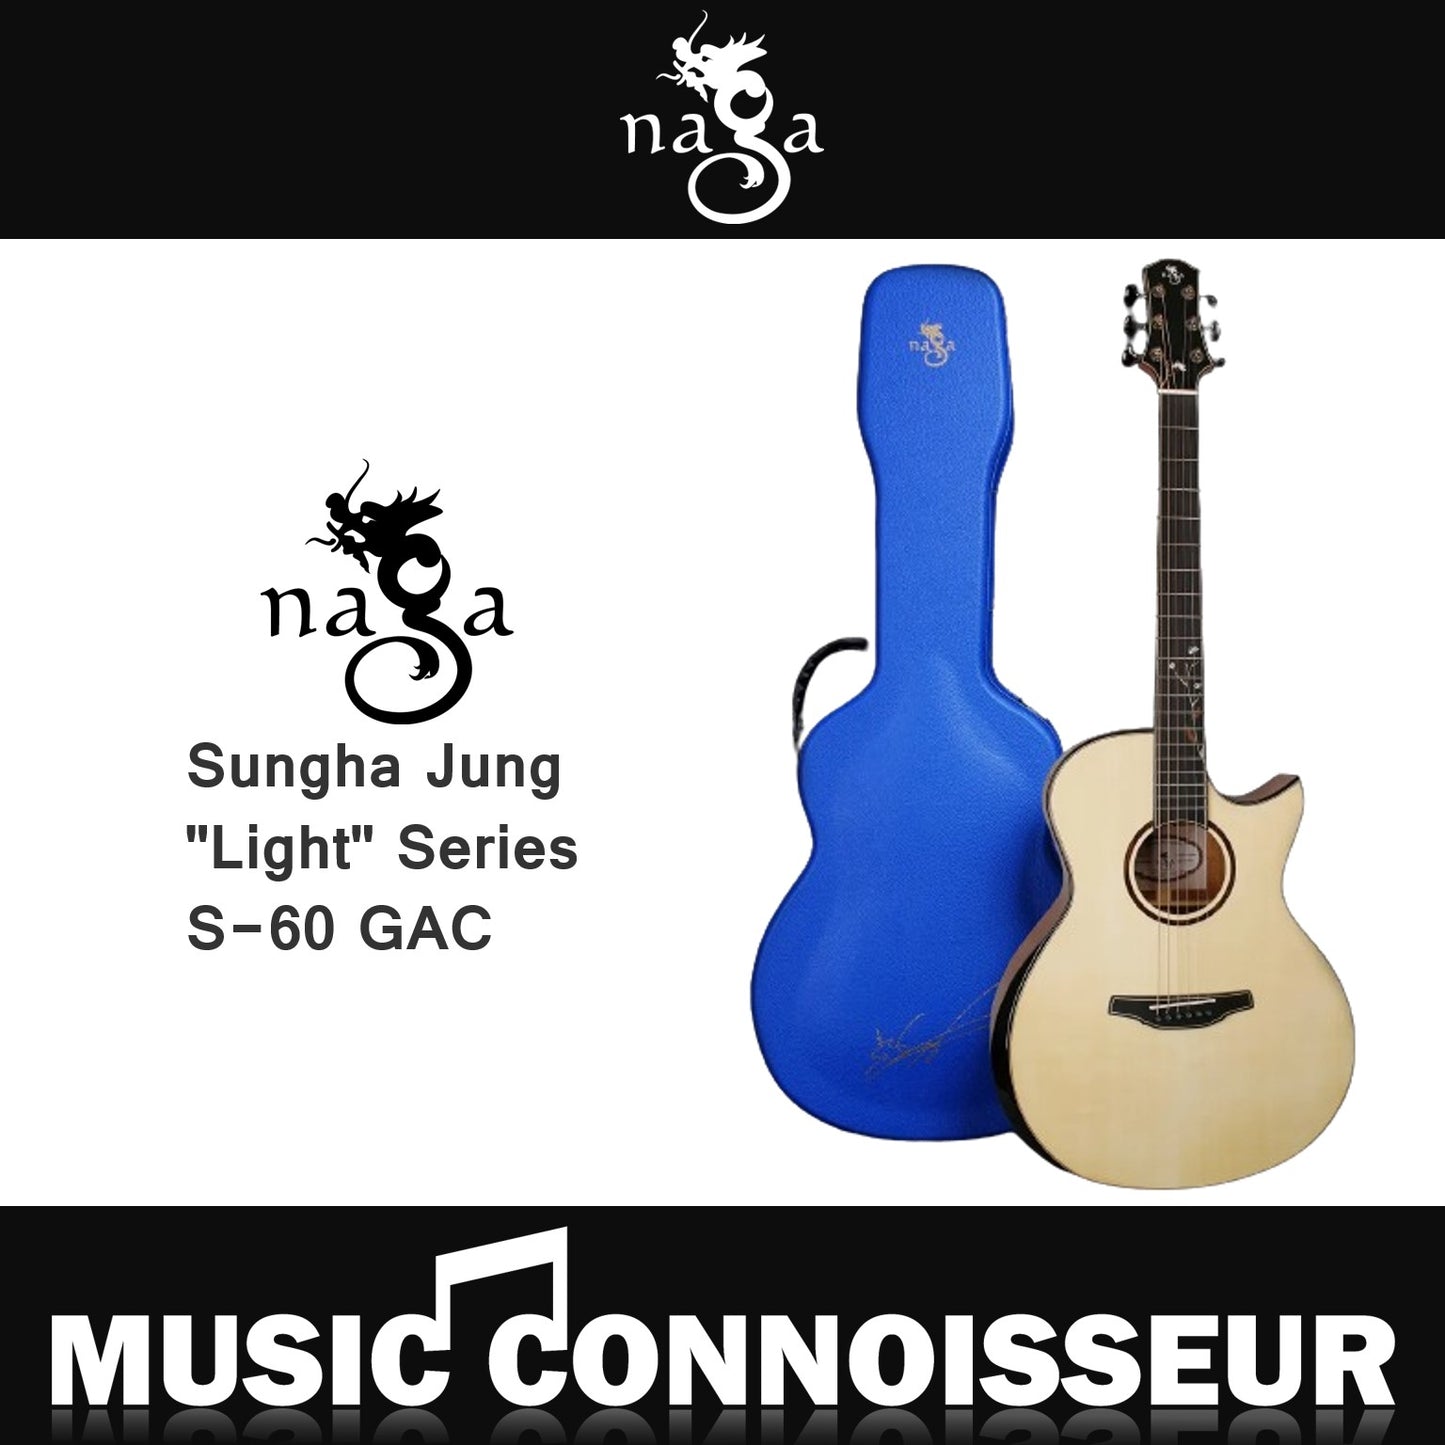 Sungha Jung "Light" Series - S-60 GAC Acoustic Guitar